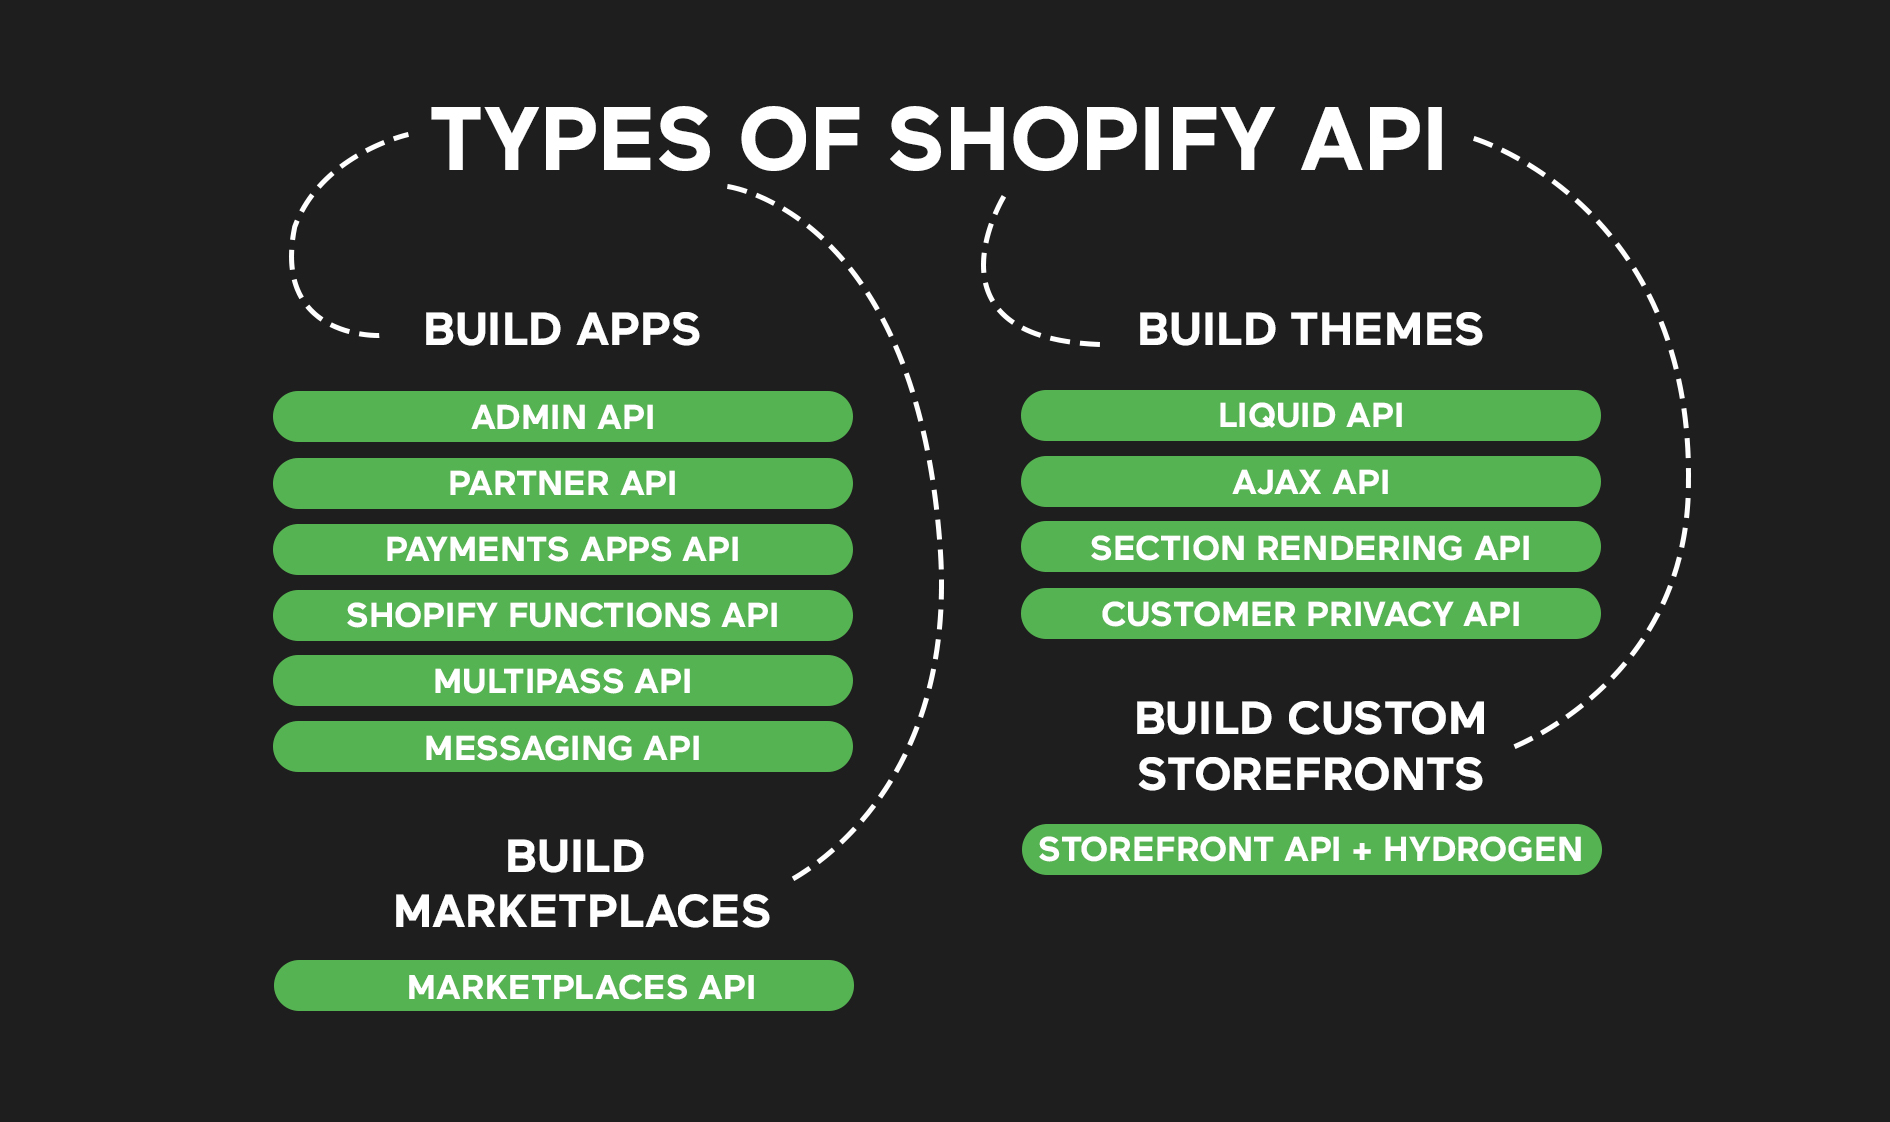 Types of Shopify API